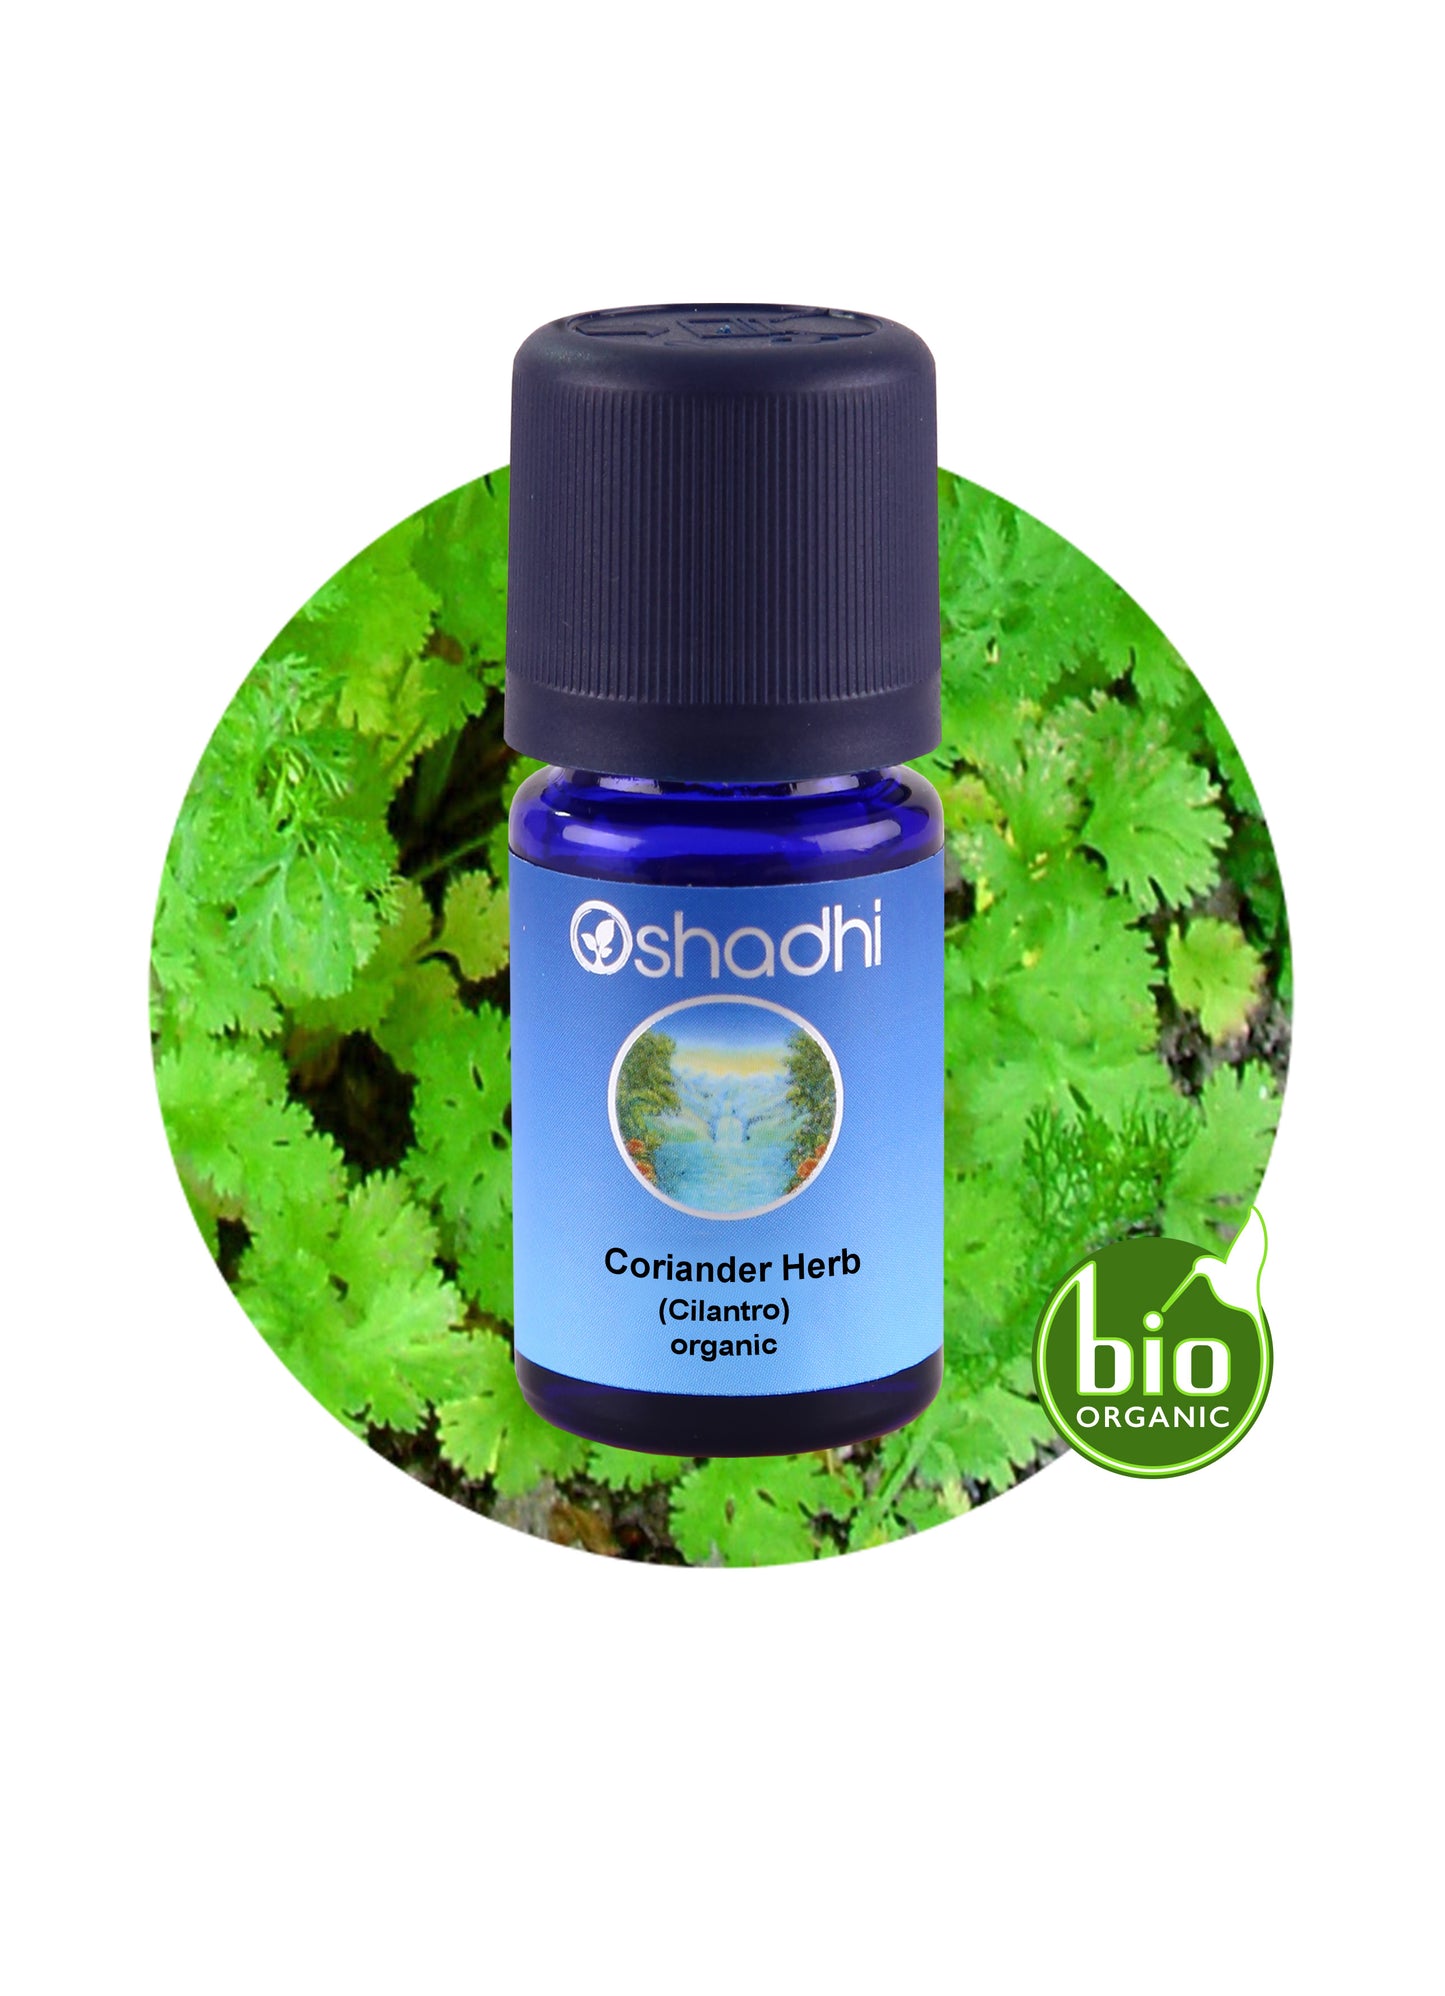 Coriander Herb / Cilantro (organic)